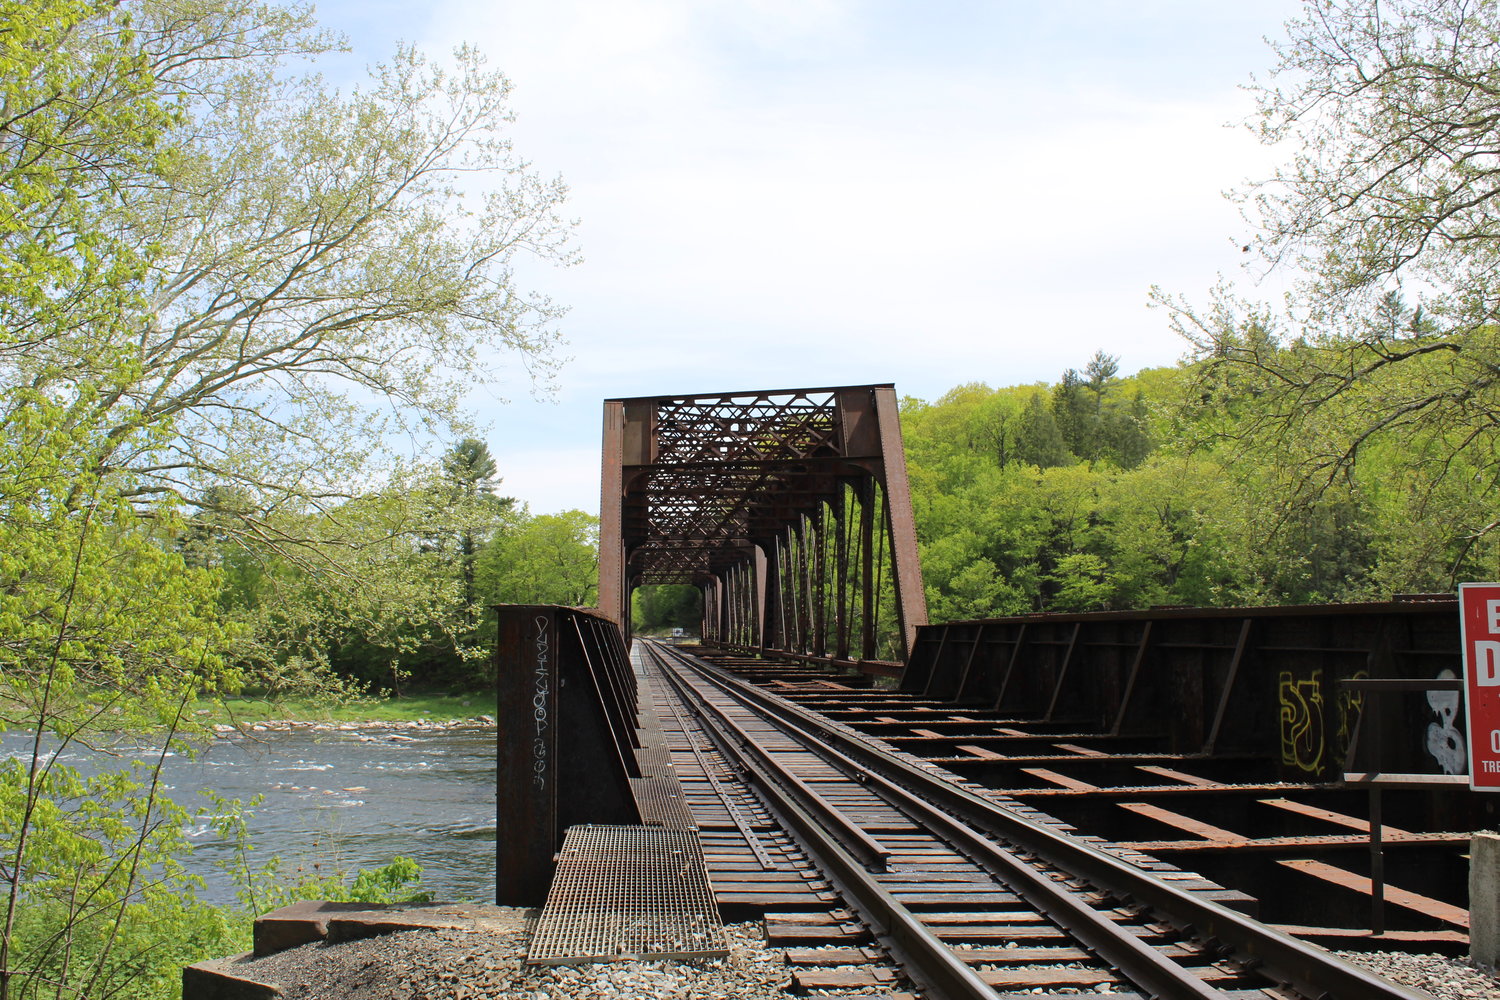 The Erie train tracks over Ten Mile River.